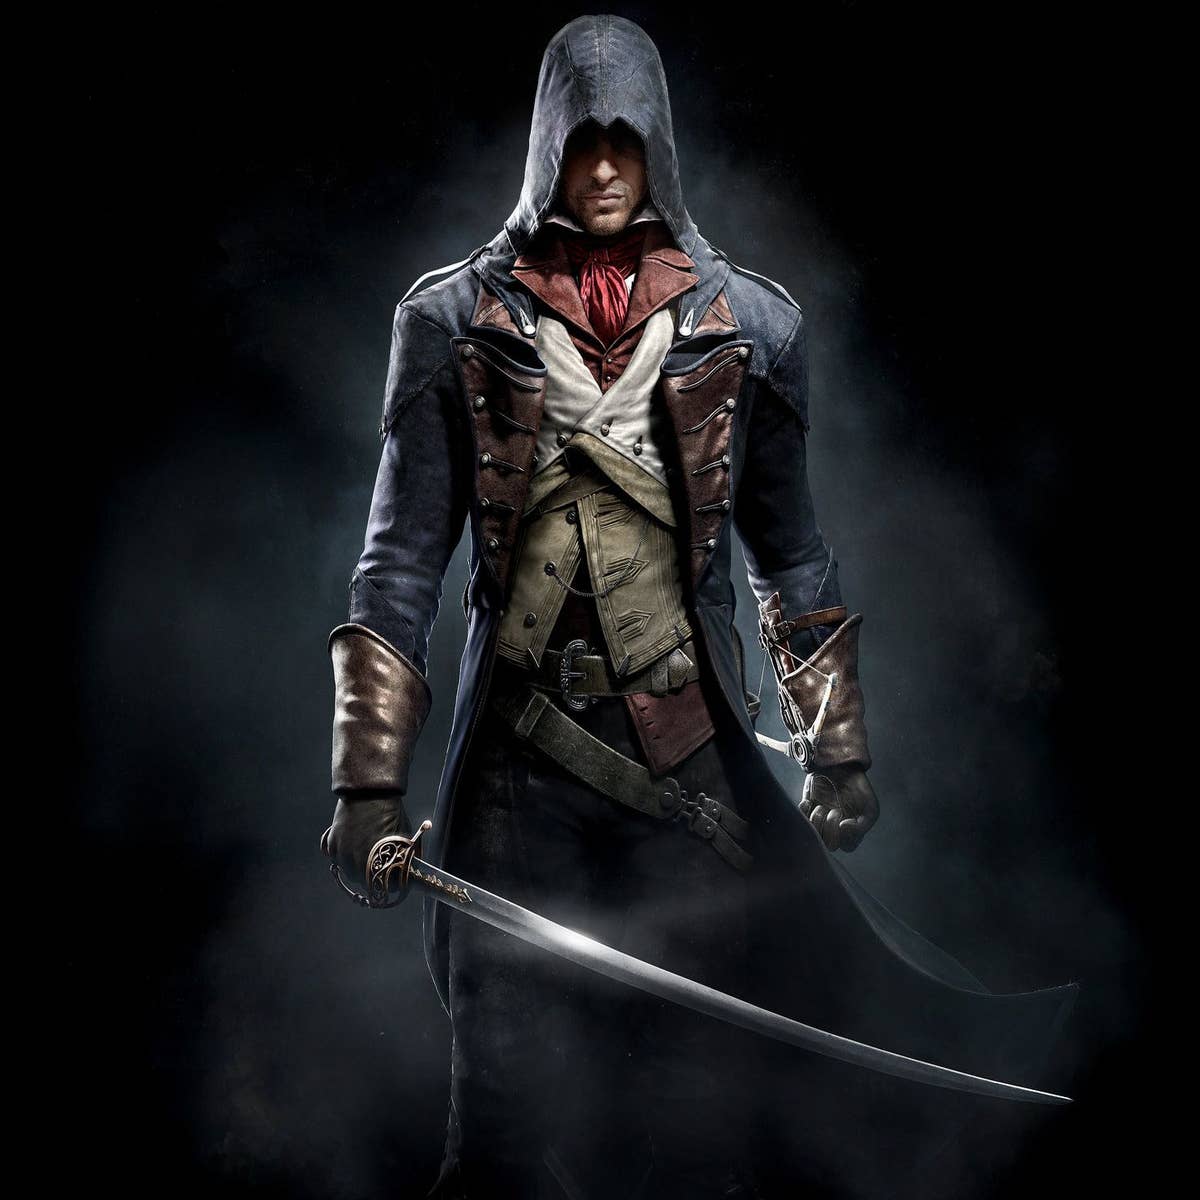 Ubisoft Assassin's Creed: Unity Sony PlayStation 4 